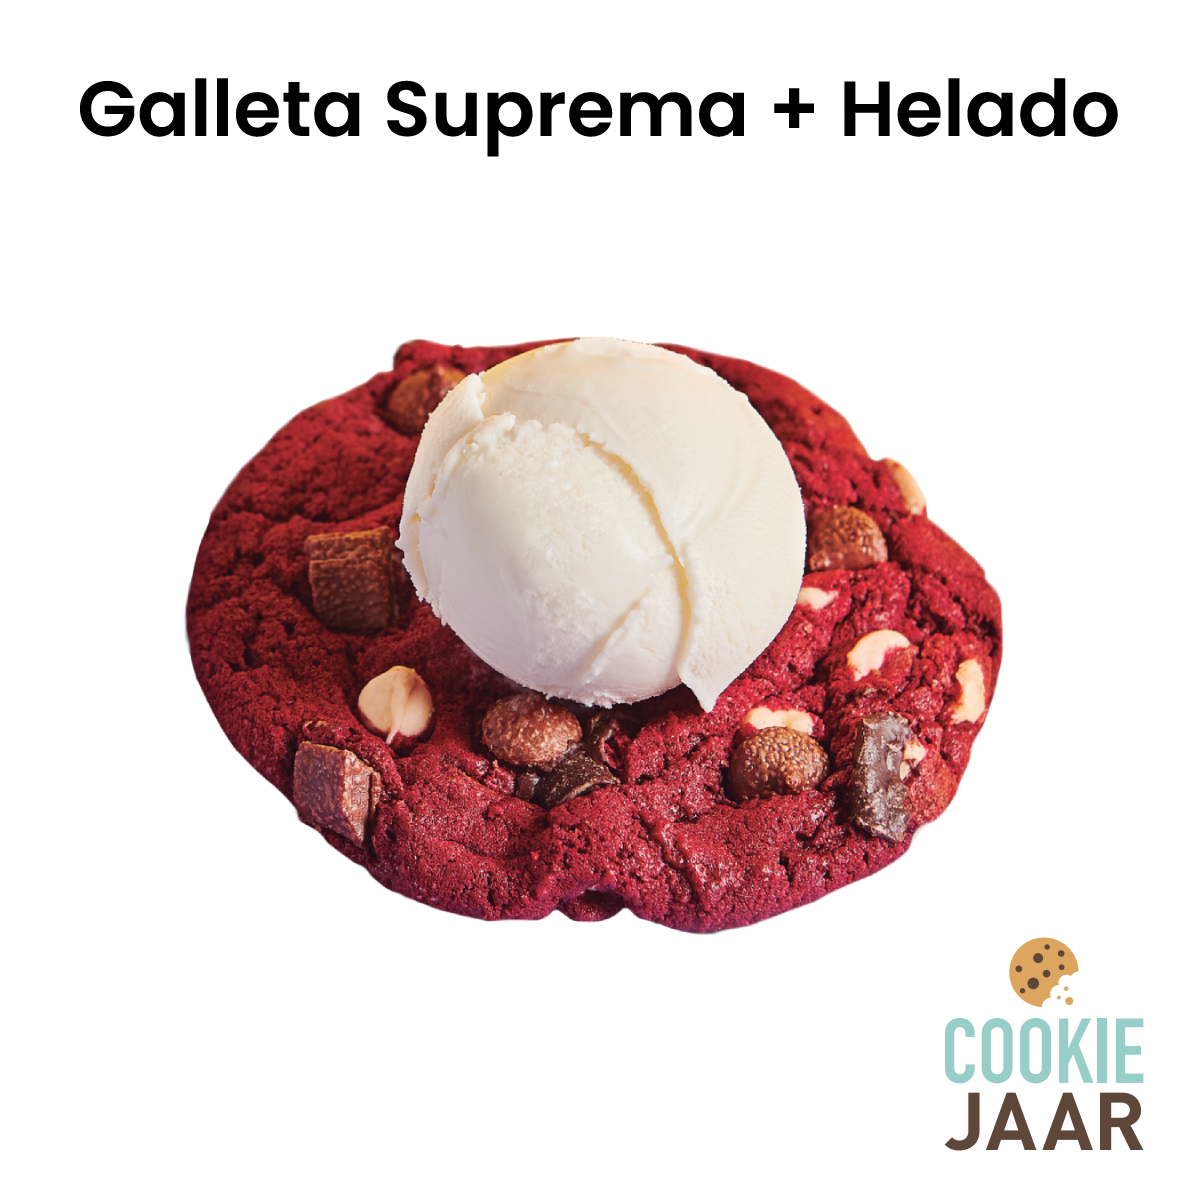 Galleta Suprema + Helado - Cookie Jaar